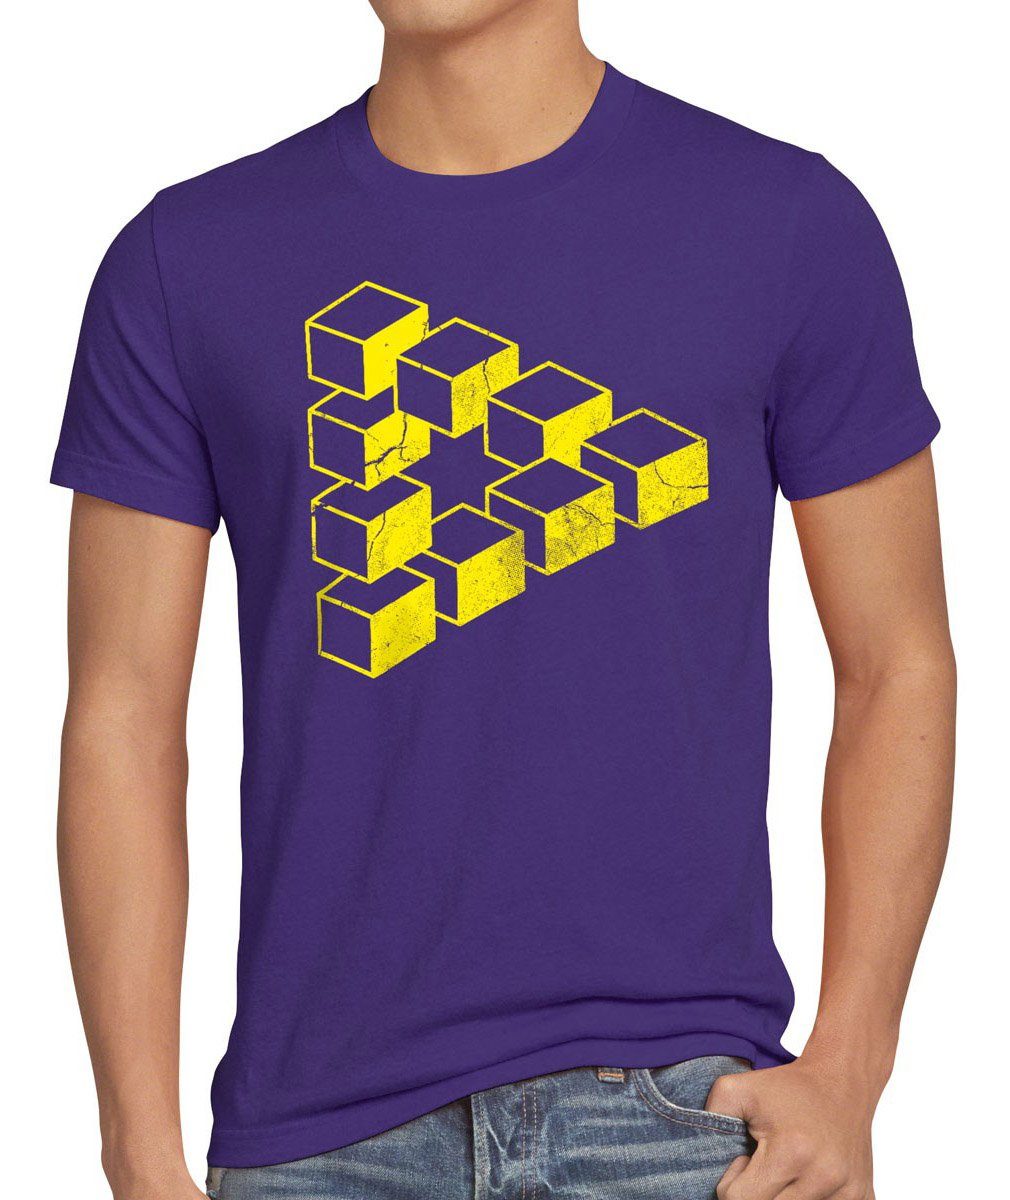 Print-Shirt Penrose Cube Big Theory würfel lila Sheldon Dreieck Escher bang Cooper style3 Herren T-Shirt